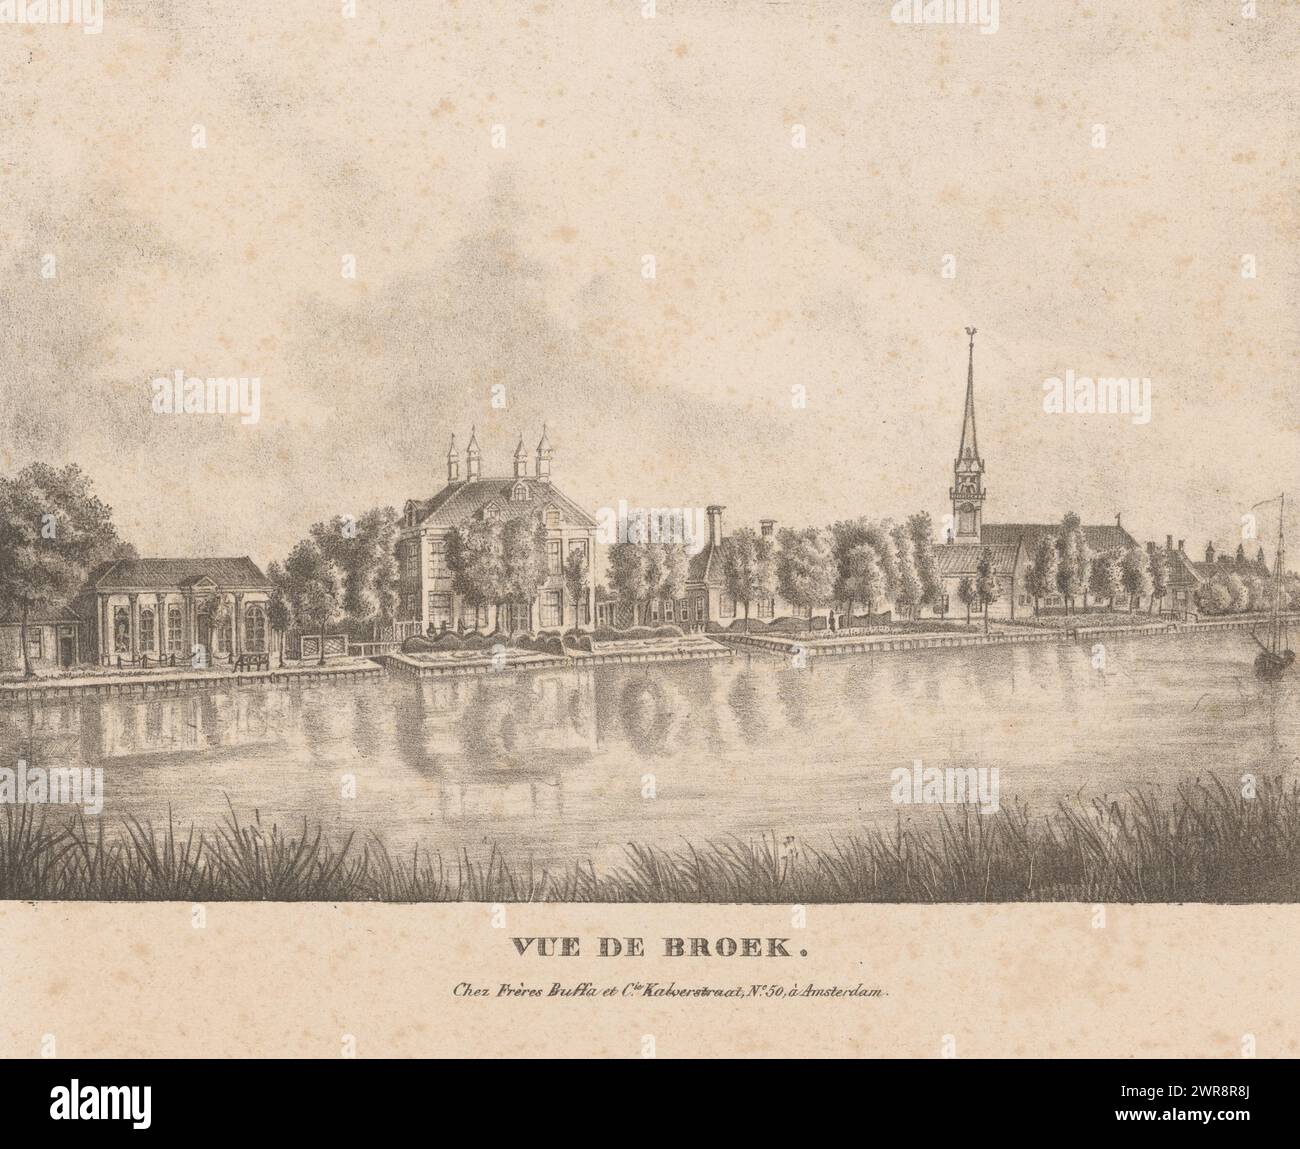 View of Broek in Waterland, Vue de Broek (title on object), print maker: anonymous, publisher: Gebroeders Buffa & Co, Amsterdam, 1800 - 1850, paper, height 250 mm × width 310 mm, print Stock Photo